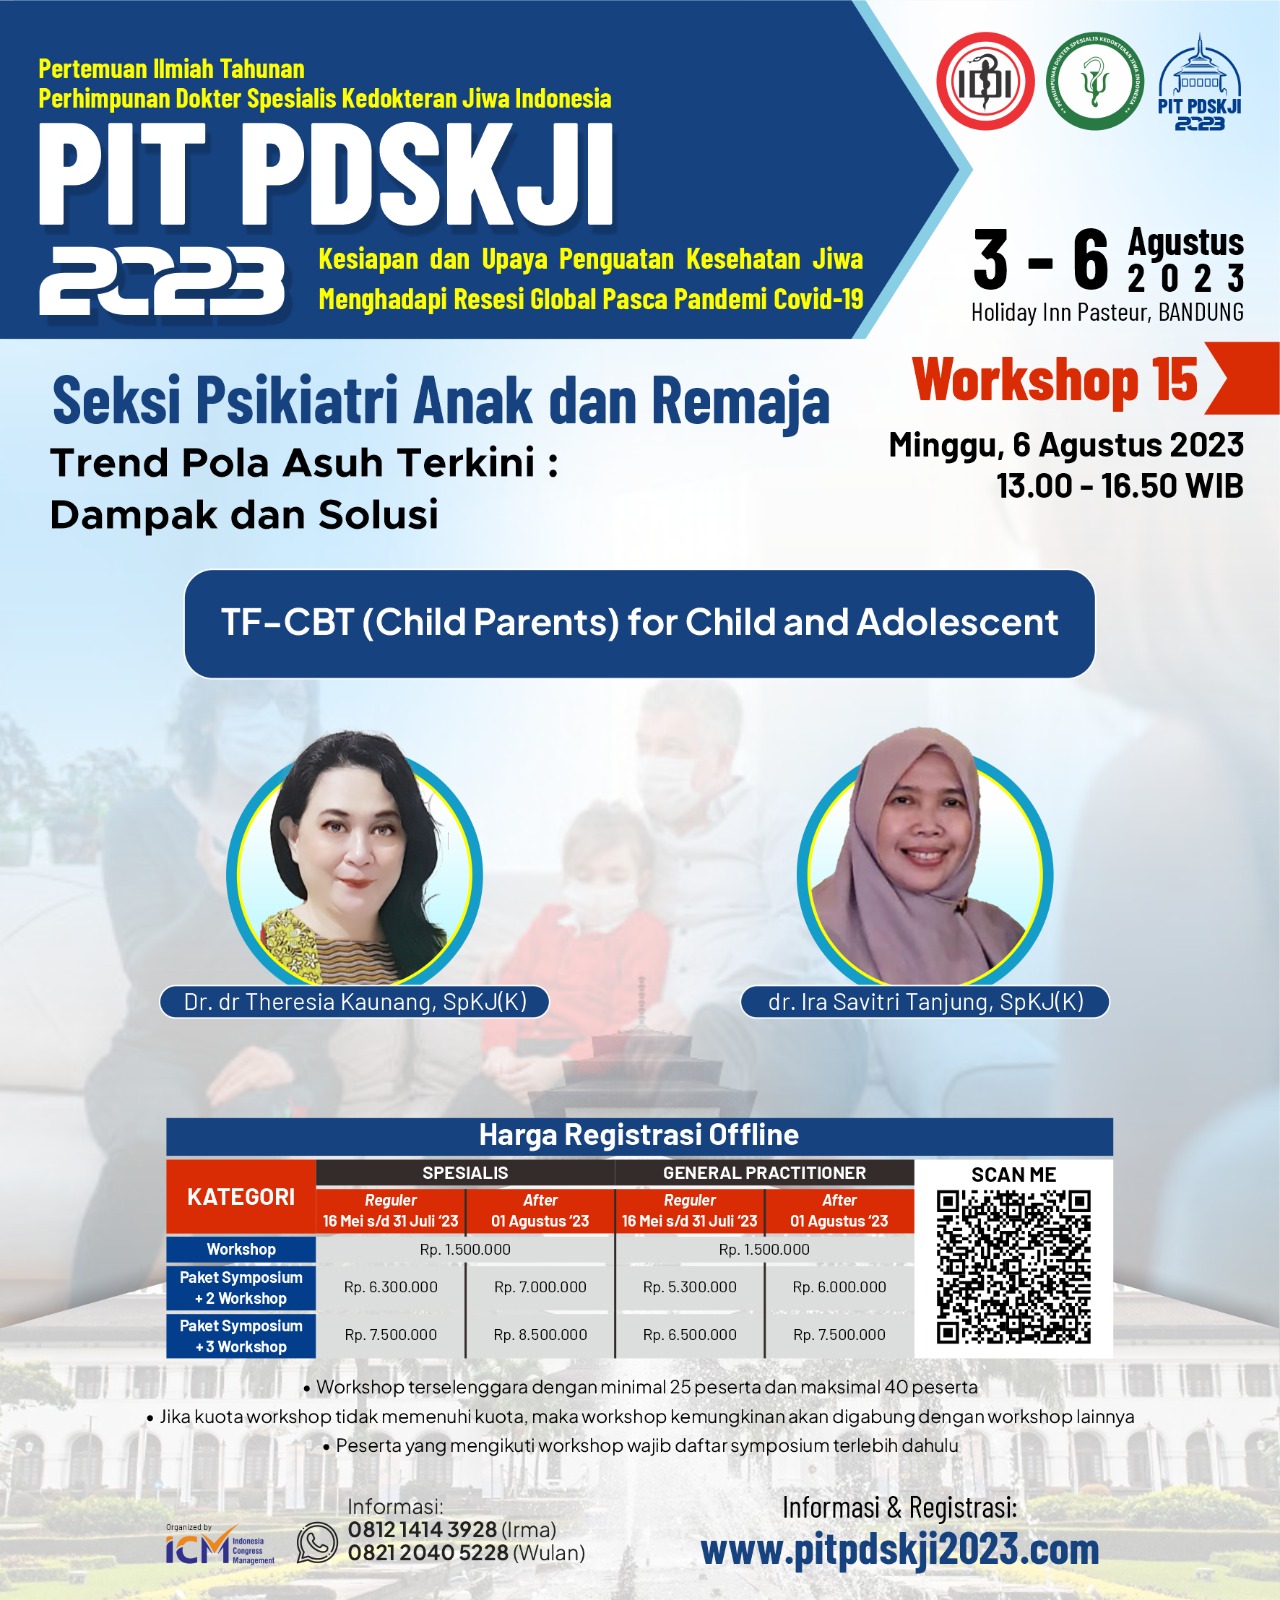 PIT PDSKJI Workshop 15 : Seksi Psikiatri Anak dan Remaja